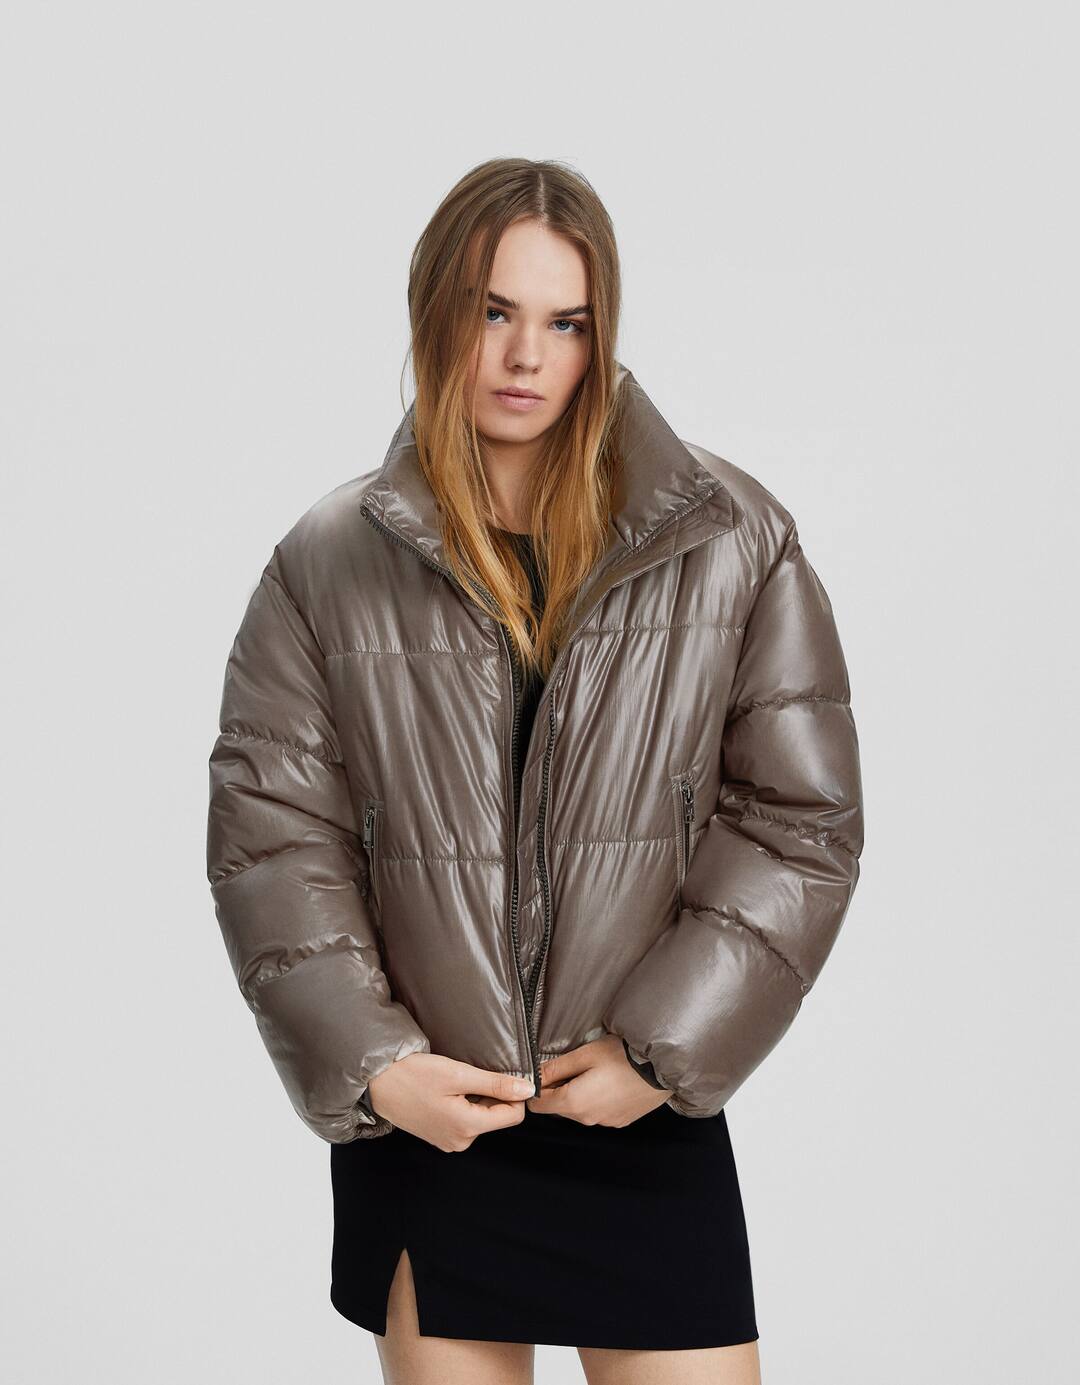 Heat-sensitive puffer jacket